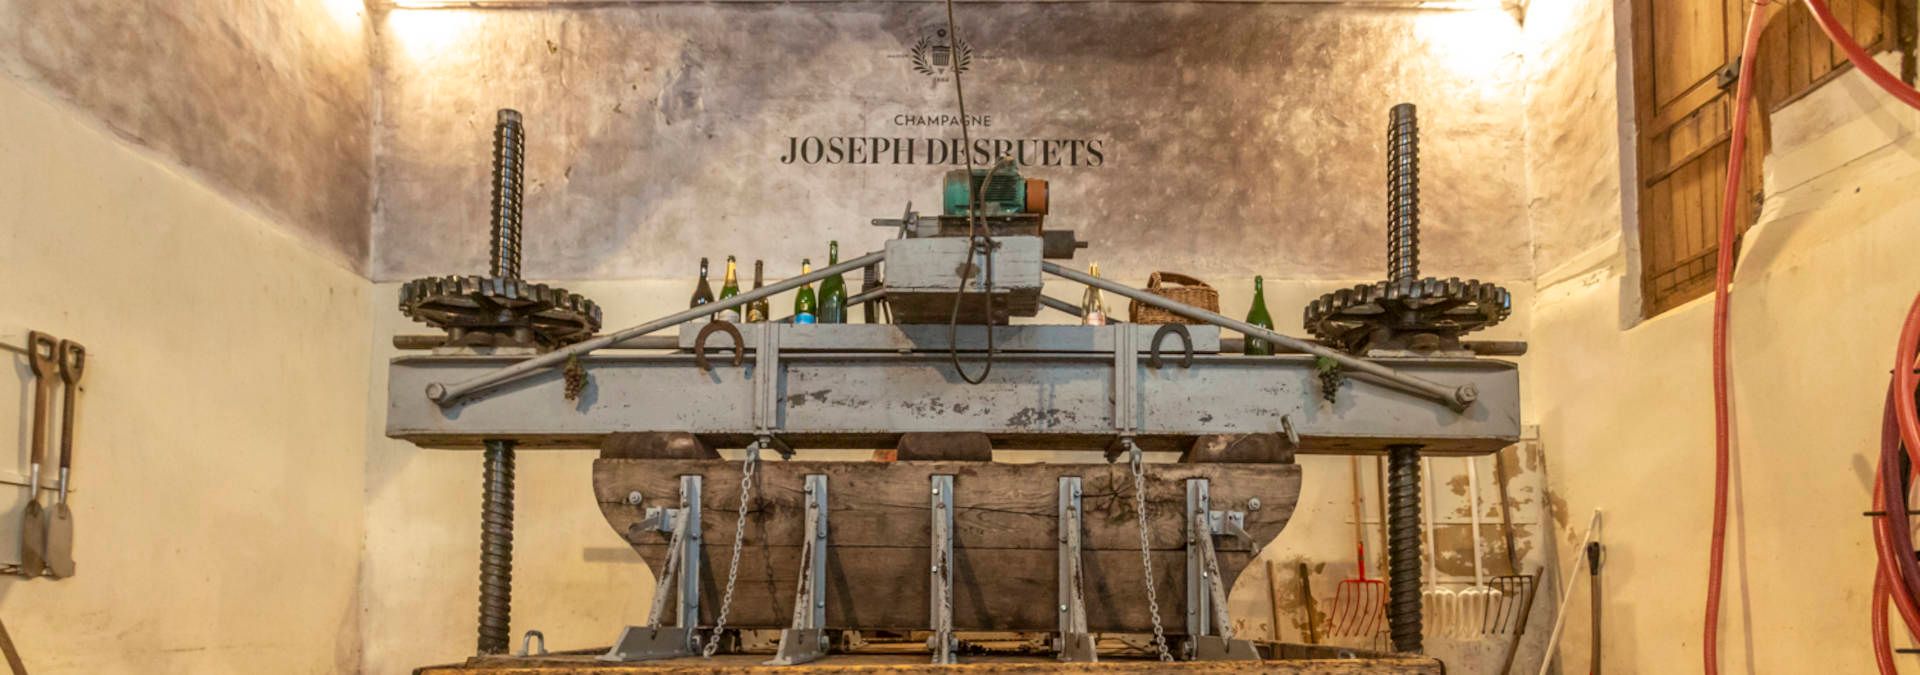 Champagne Joseph Desruets - Rue des Vignerons